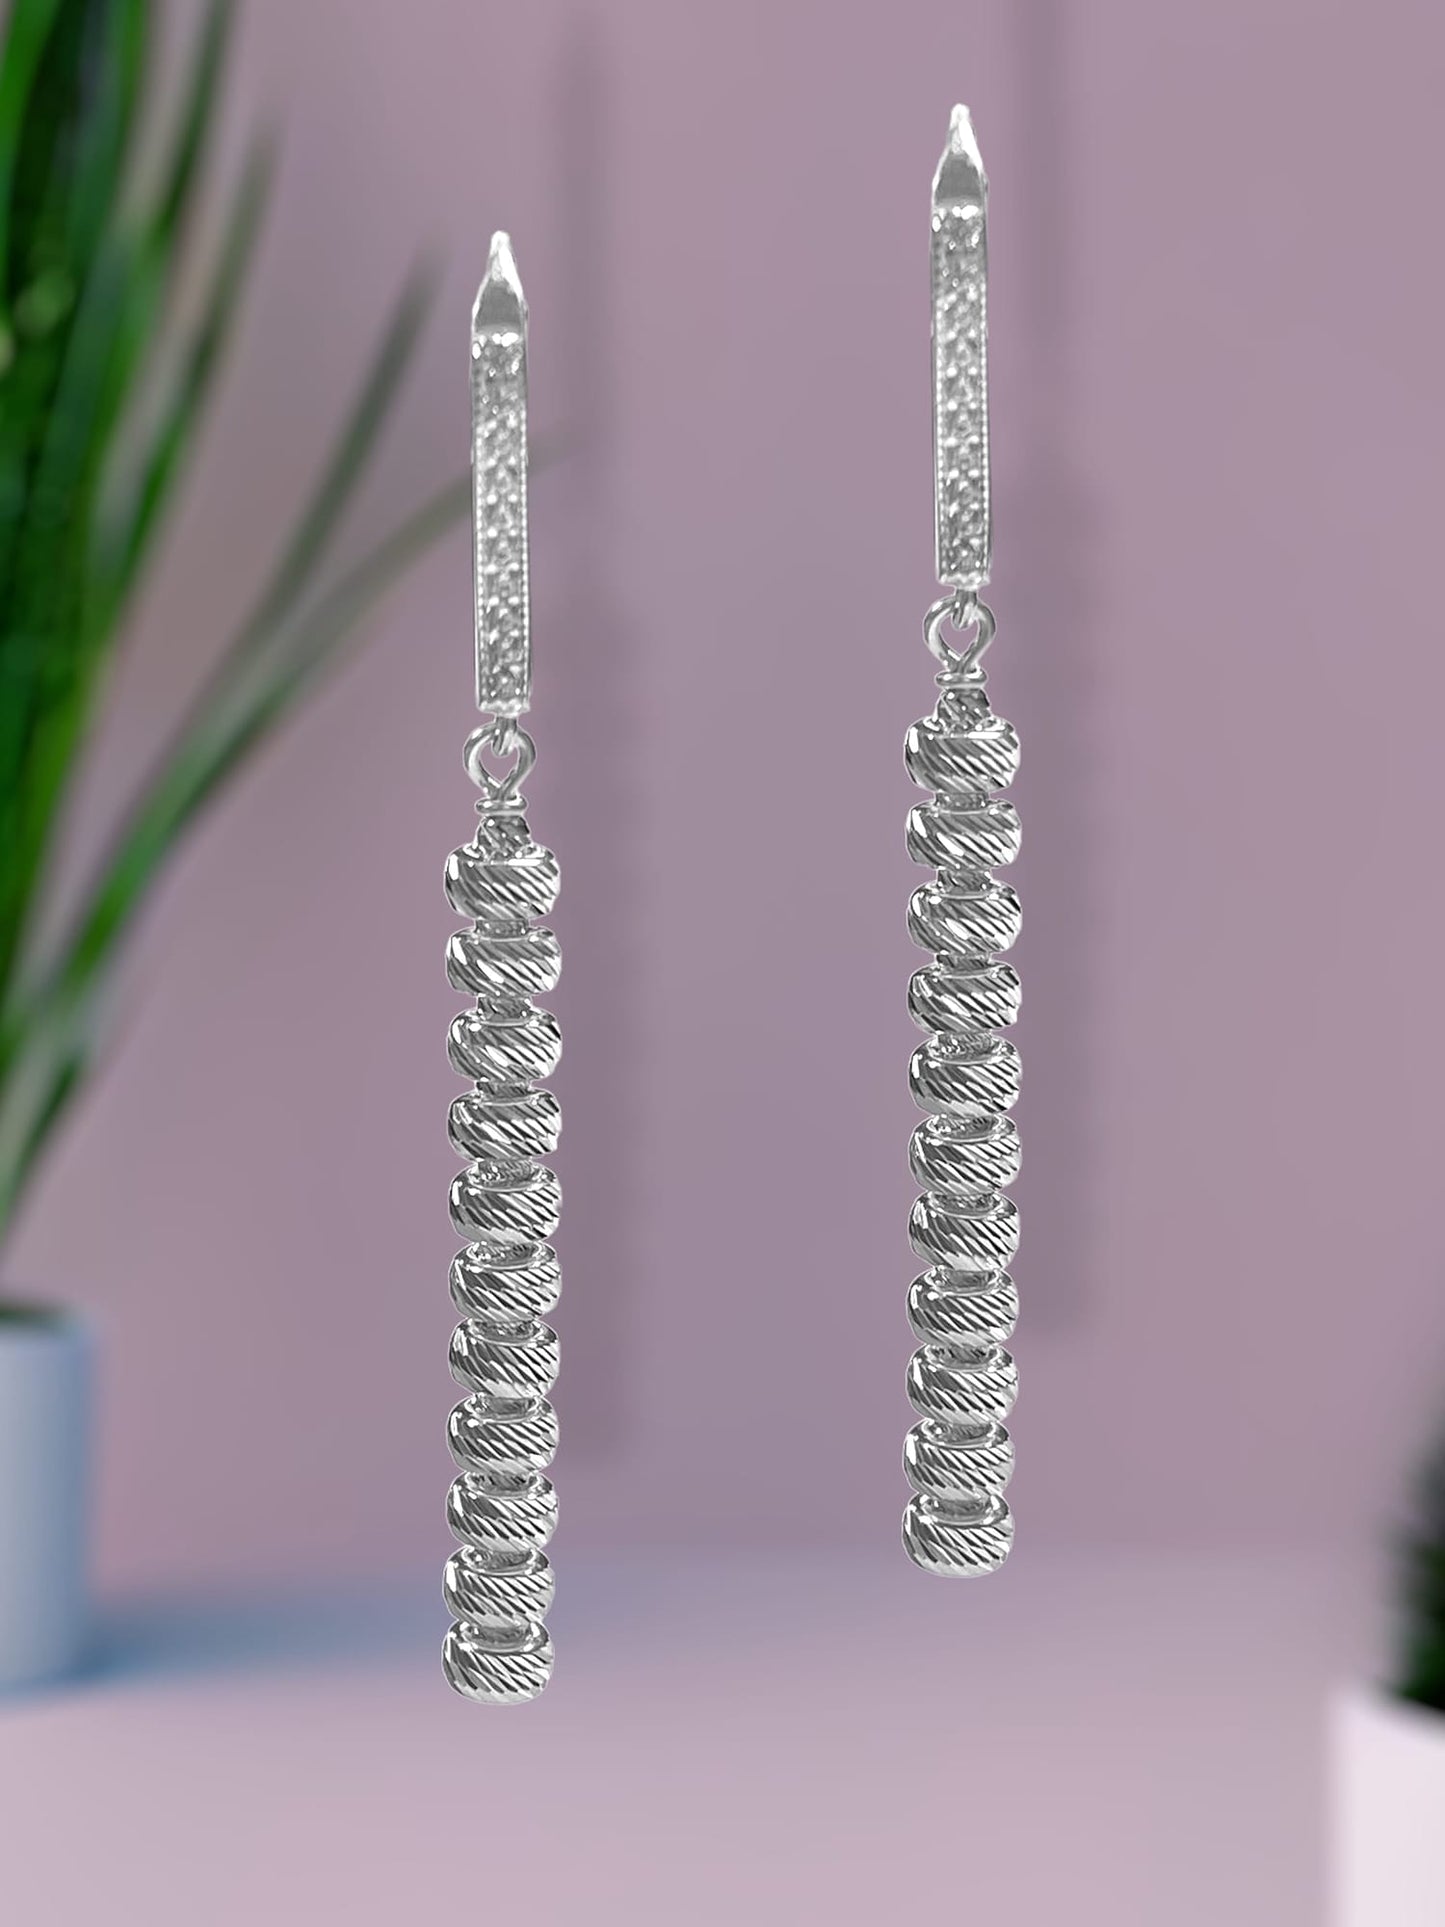 DIY Earring Kit - Stacked Silver Multi-Cut Earrings - Too Cute Beads